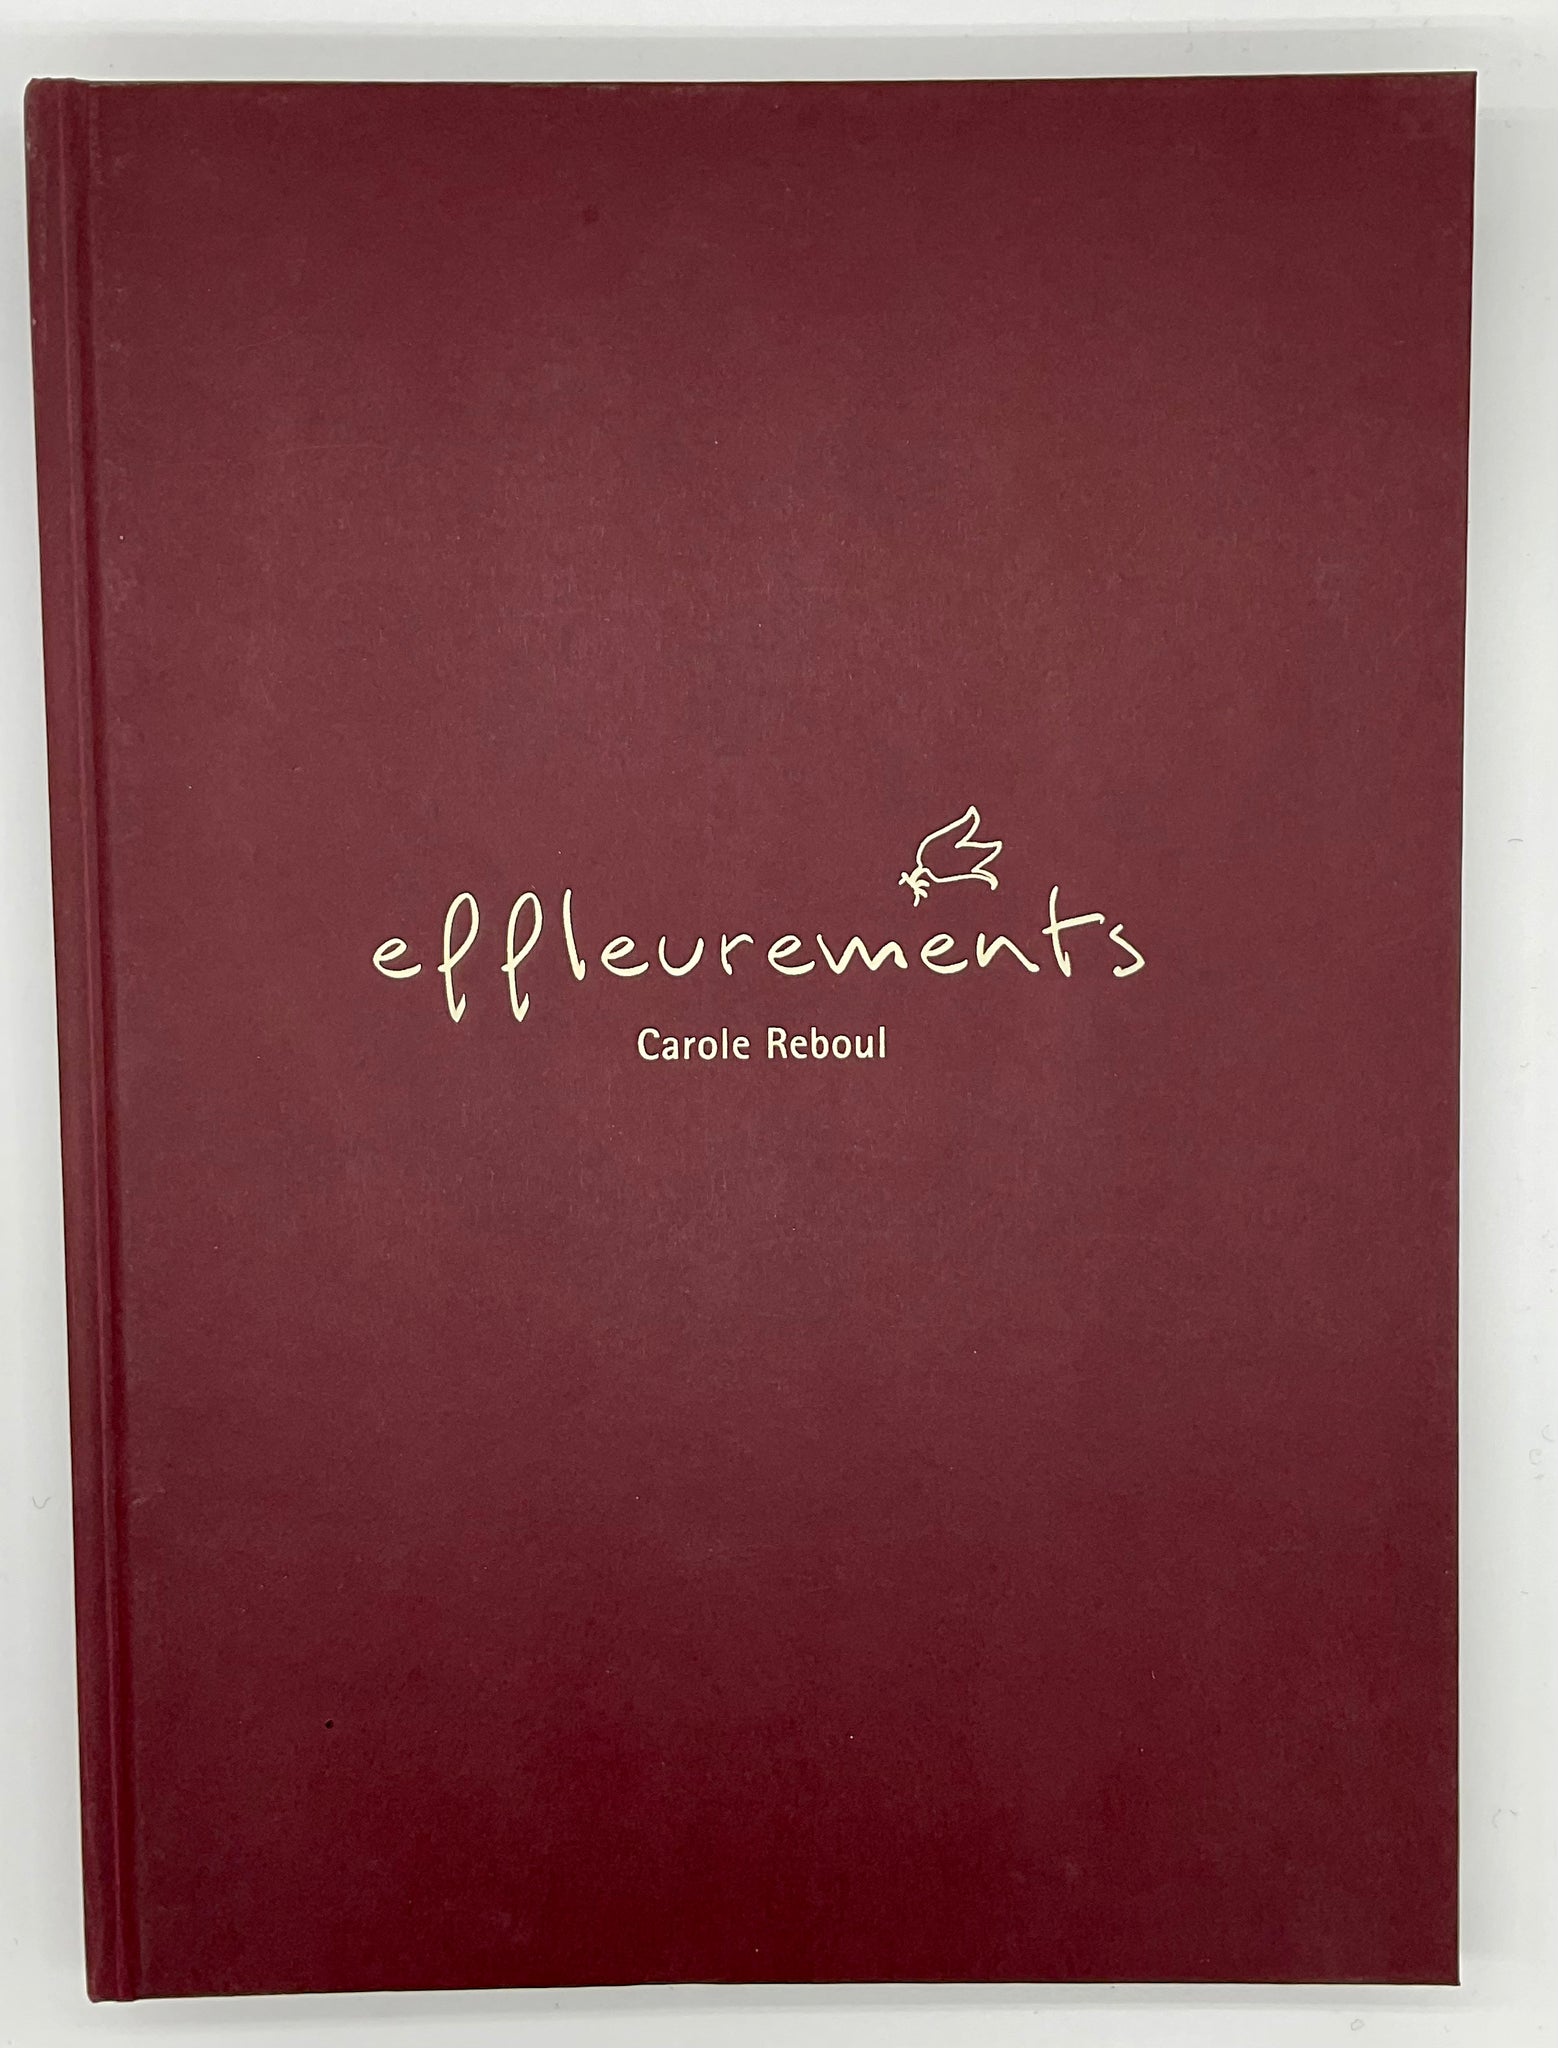 CAROLE REBOUL Livre "Effleurements"